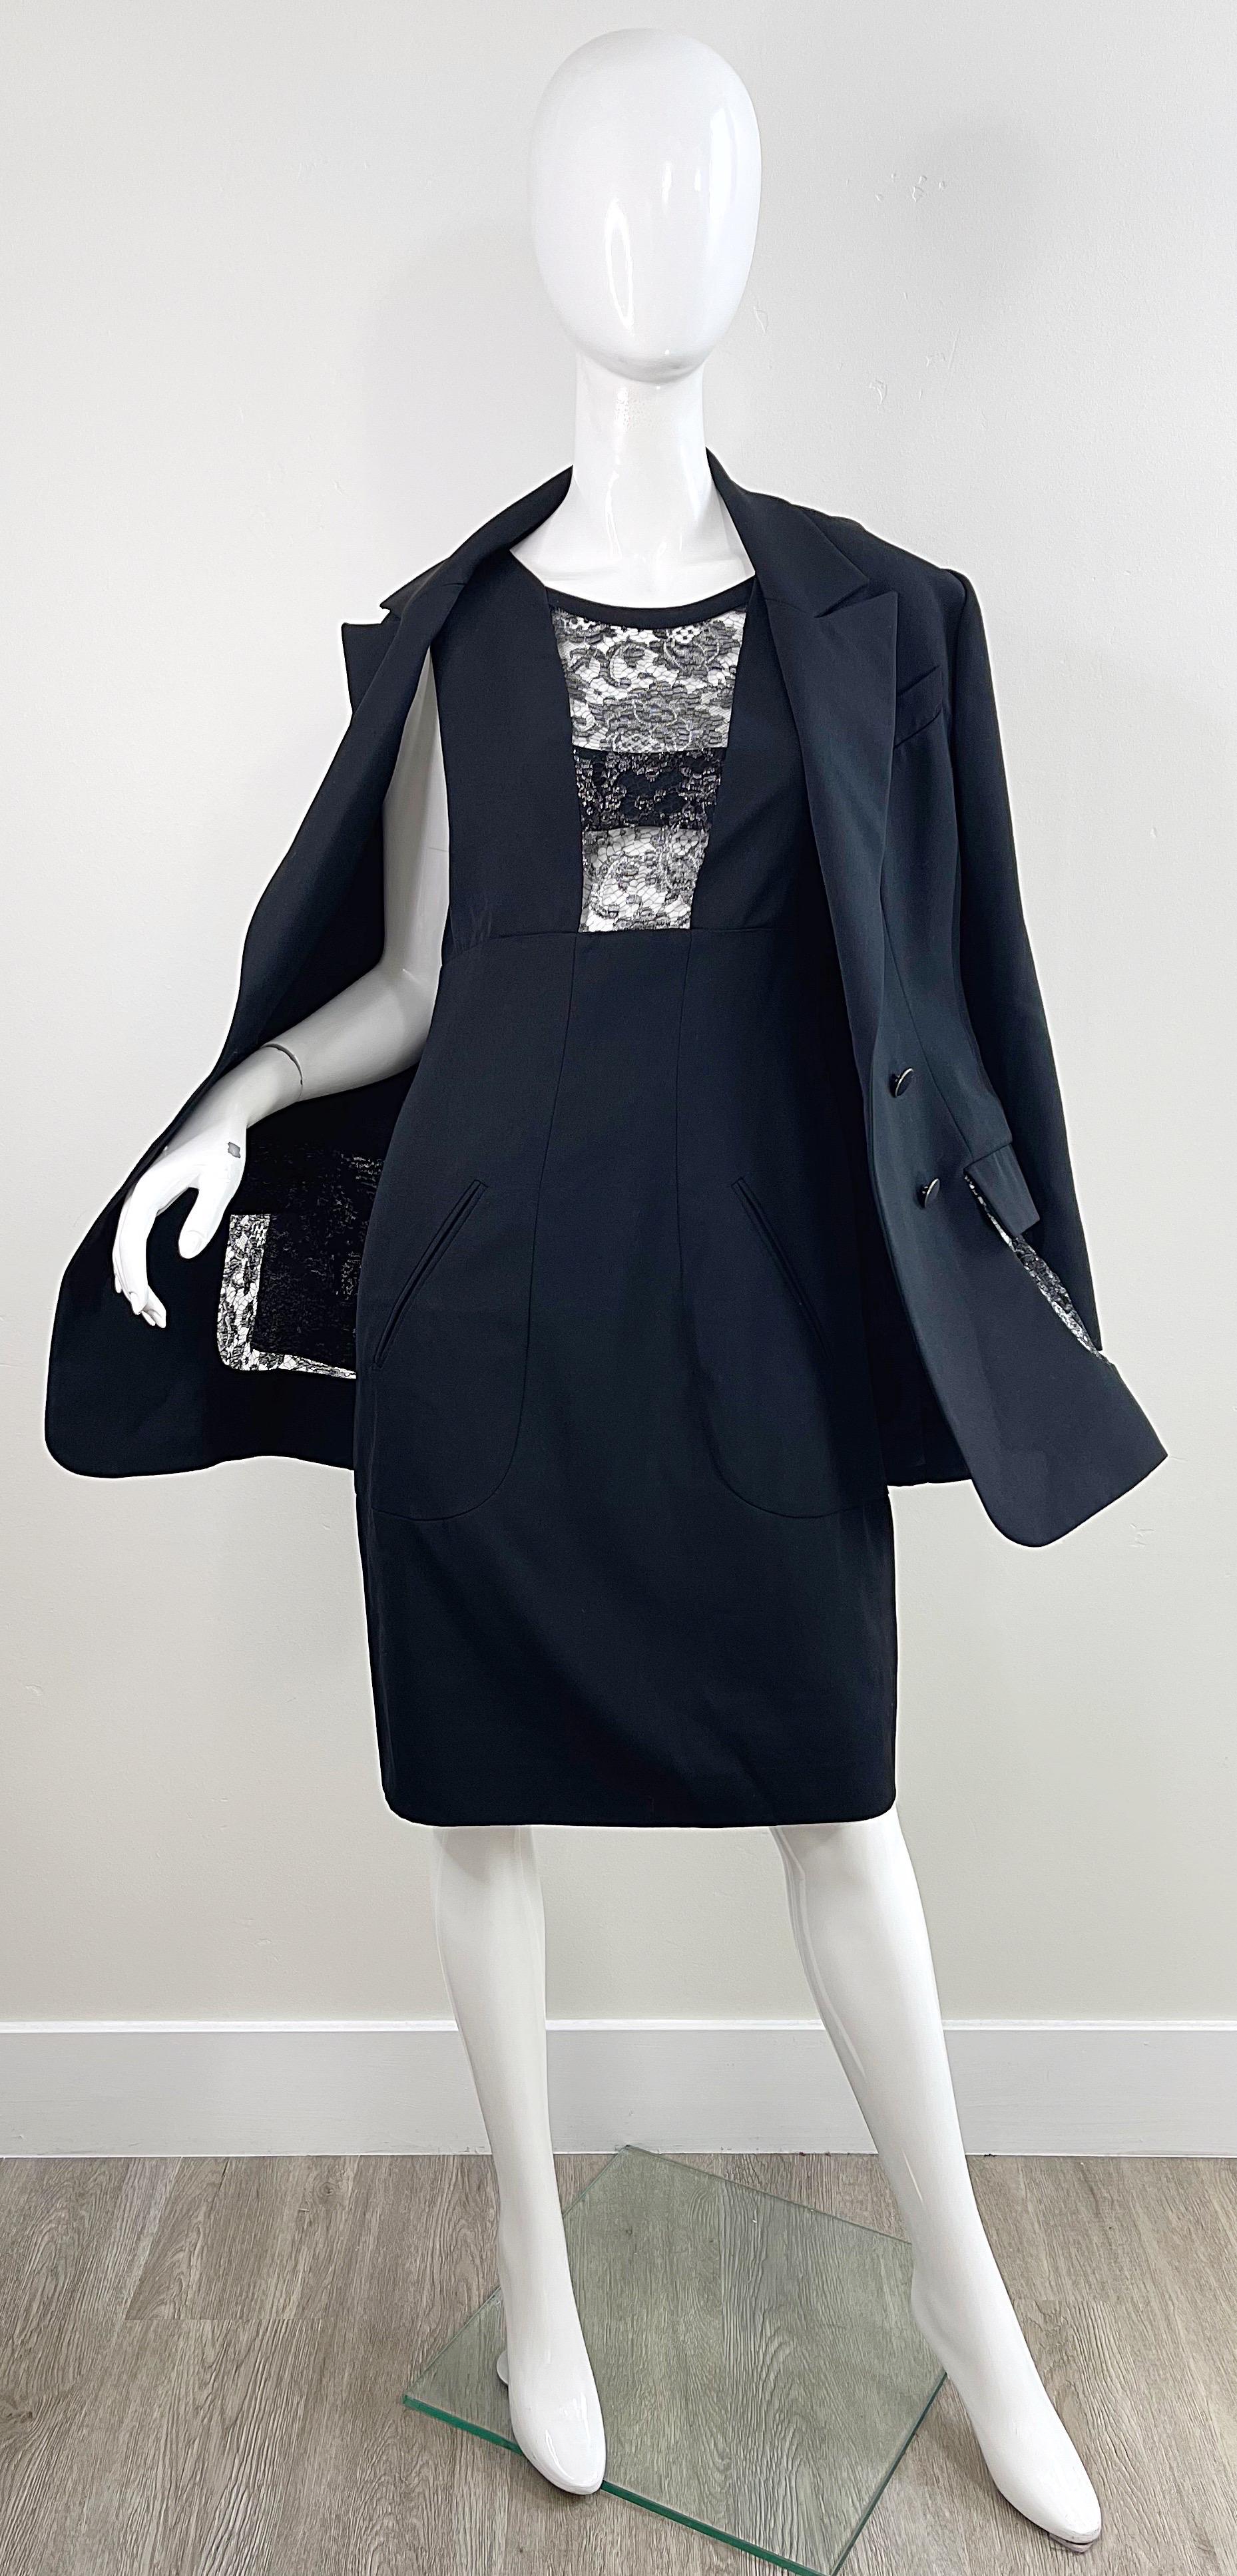 Karl Lagerfeld 1980s Black Lace Cut - Out Size 44 / 10 12 Vintage Dress + Jacket For Sale 16